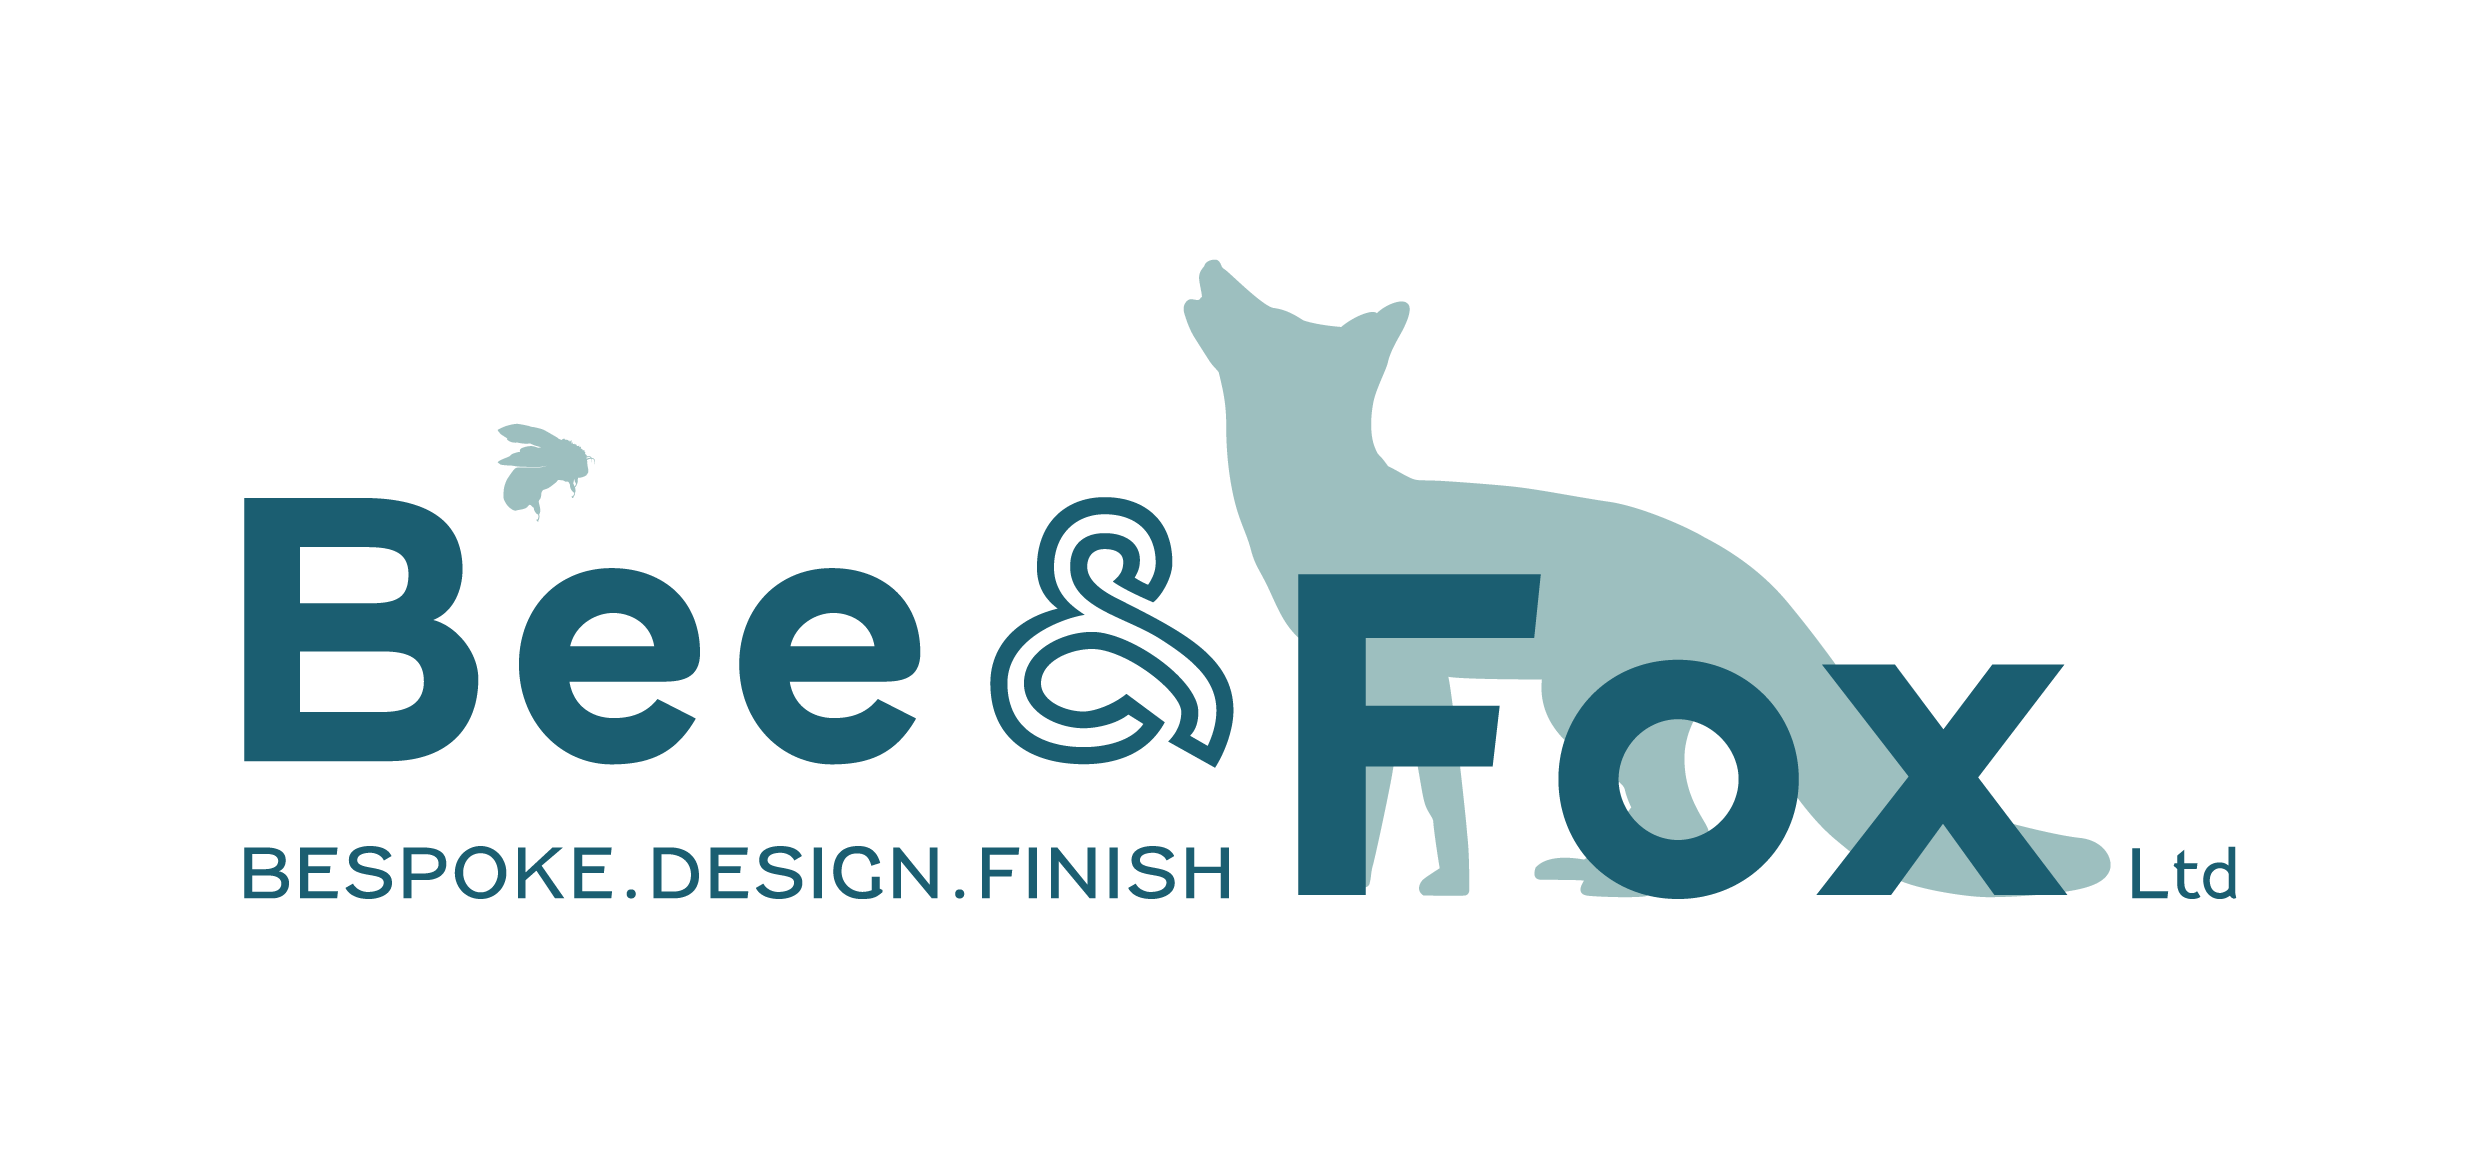 Bee & Fox Ltd